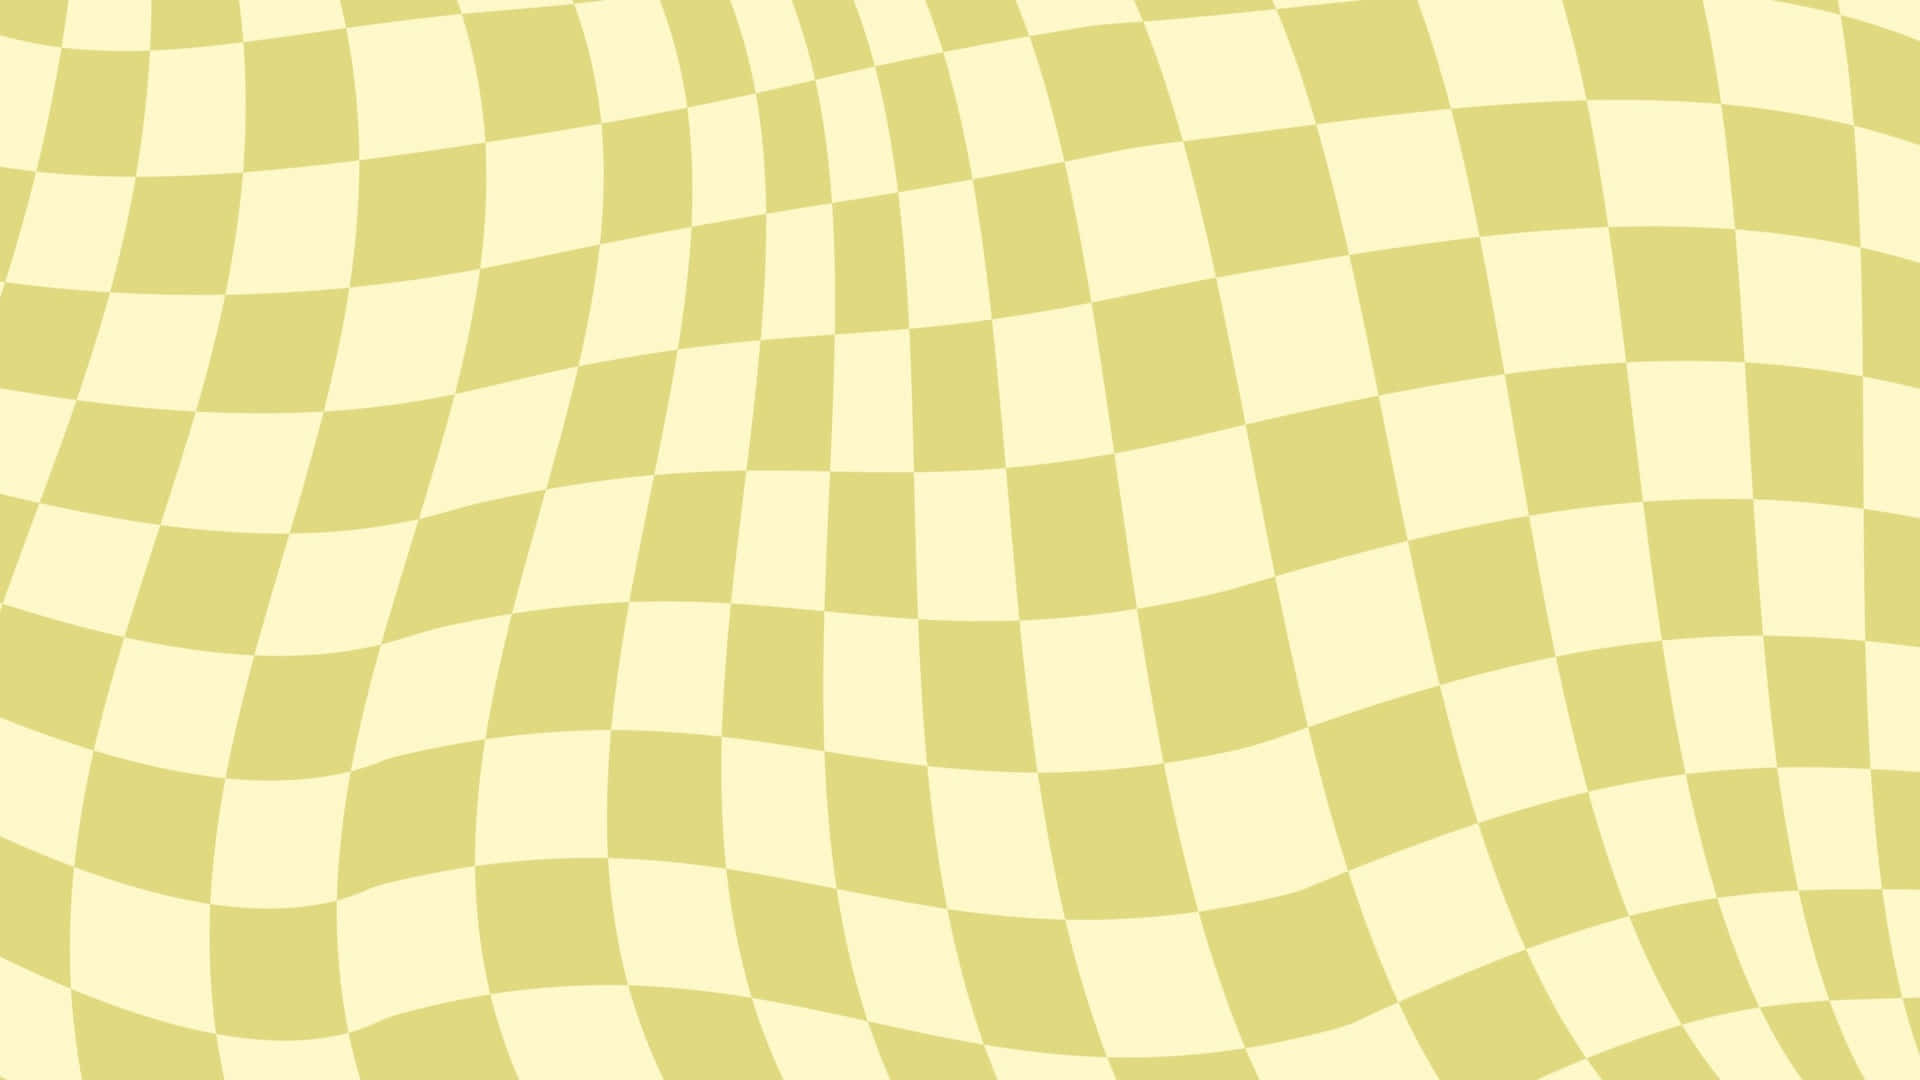 Pastel Yellow Background